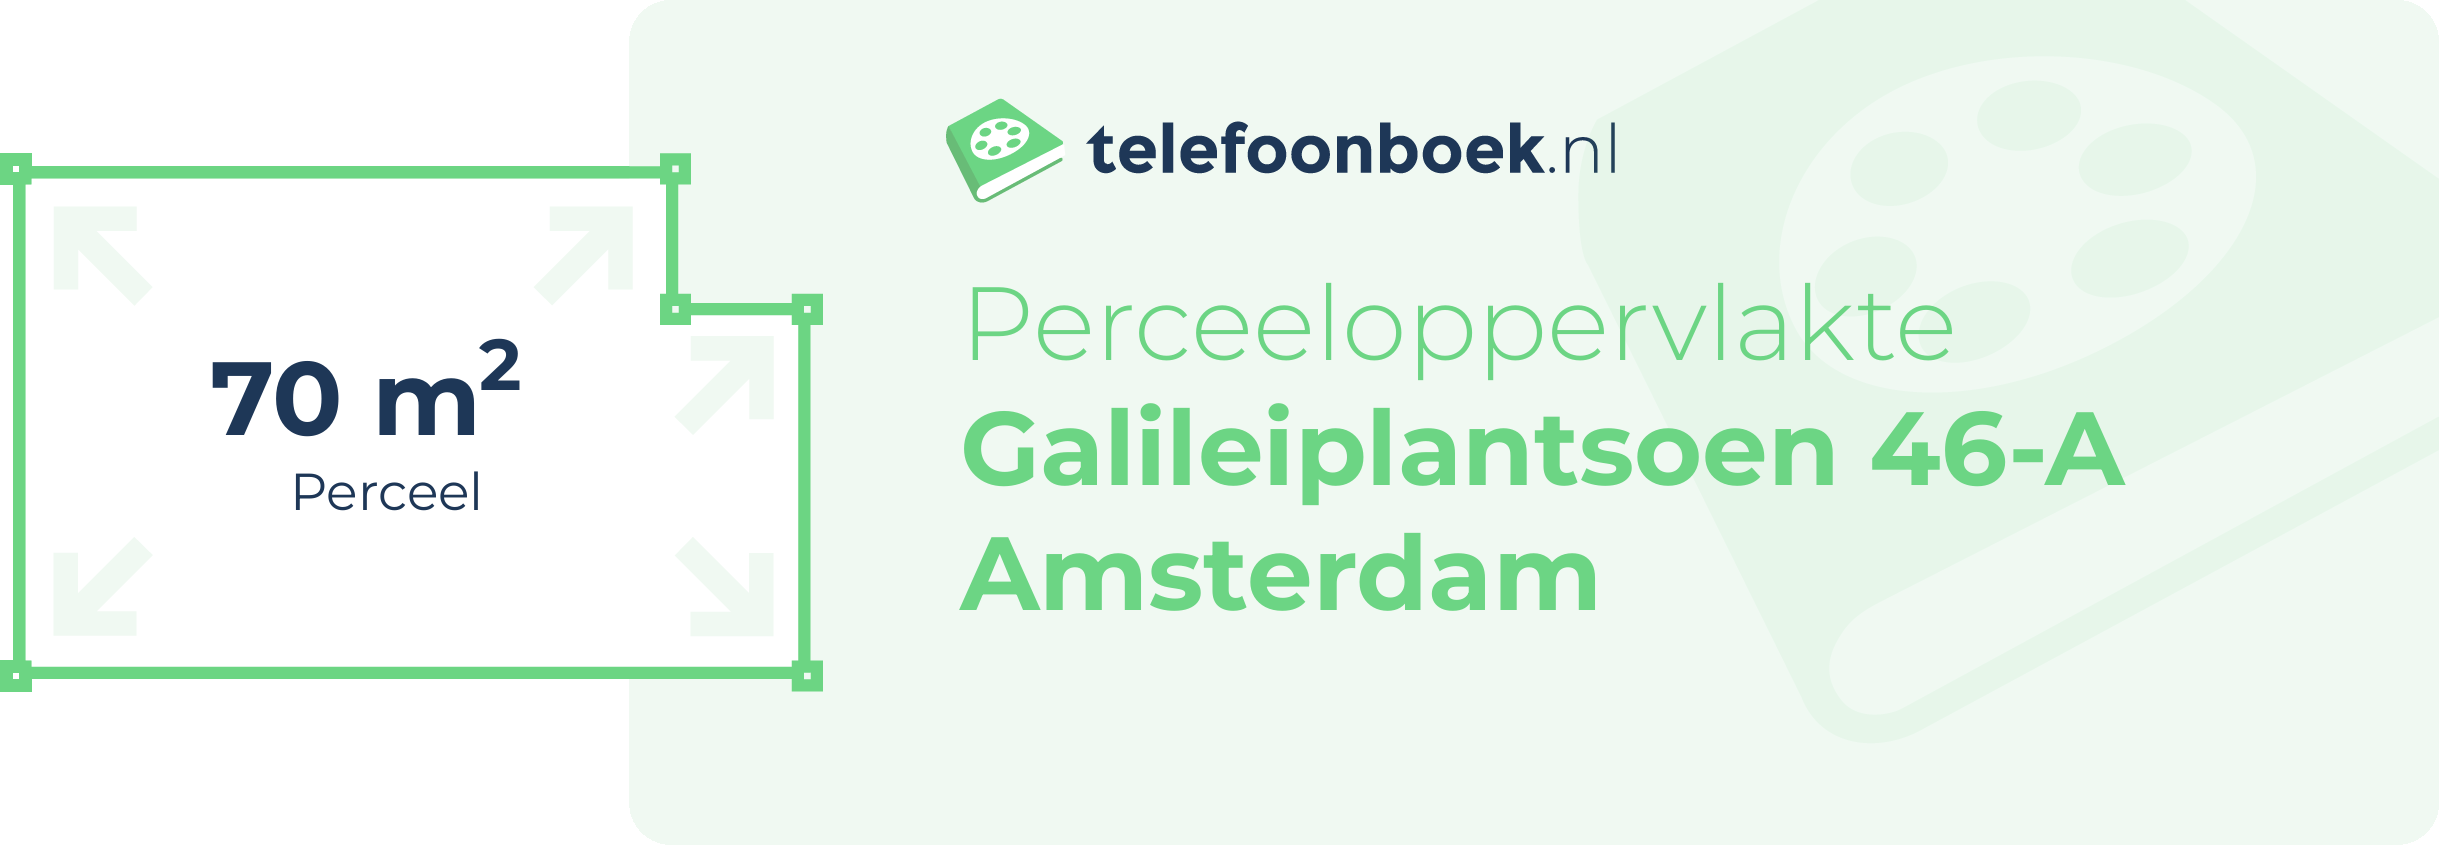 Perceeloppervlakte Galileiplantsoen 46-A Amsterdam